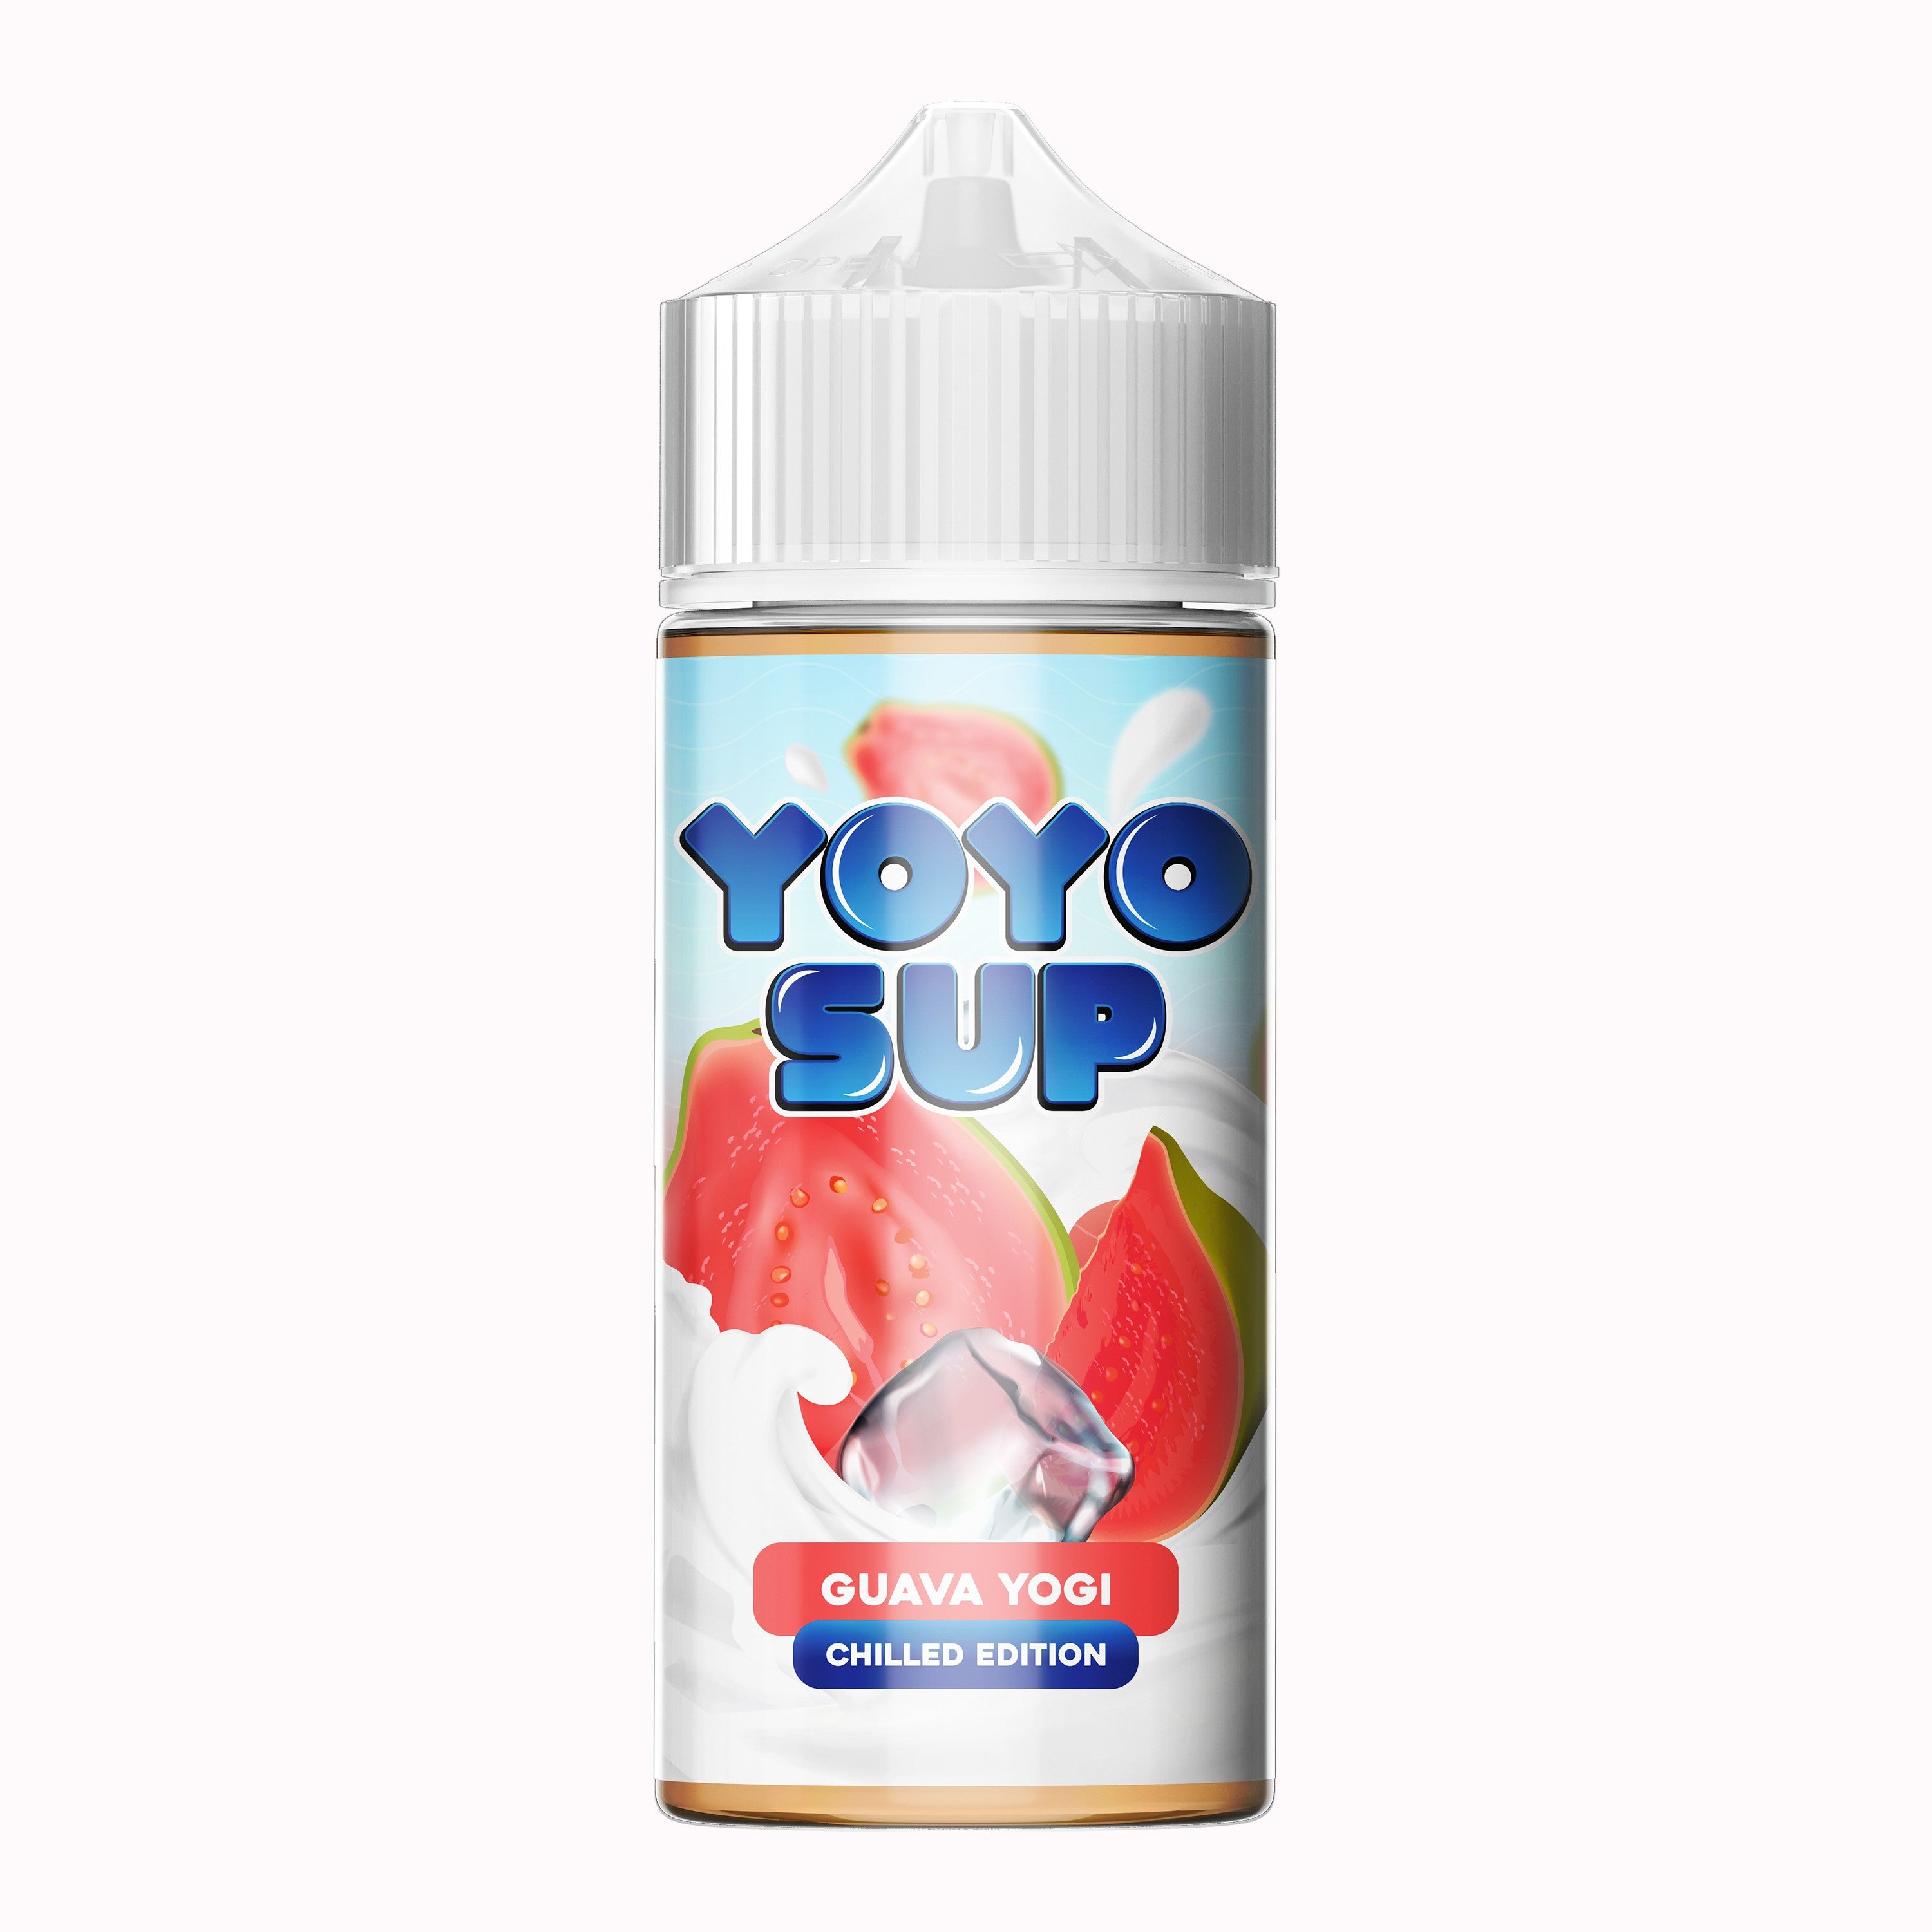 Yoyo Sup | Chilled Guava by Null E-Liquid 120ml